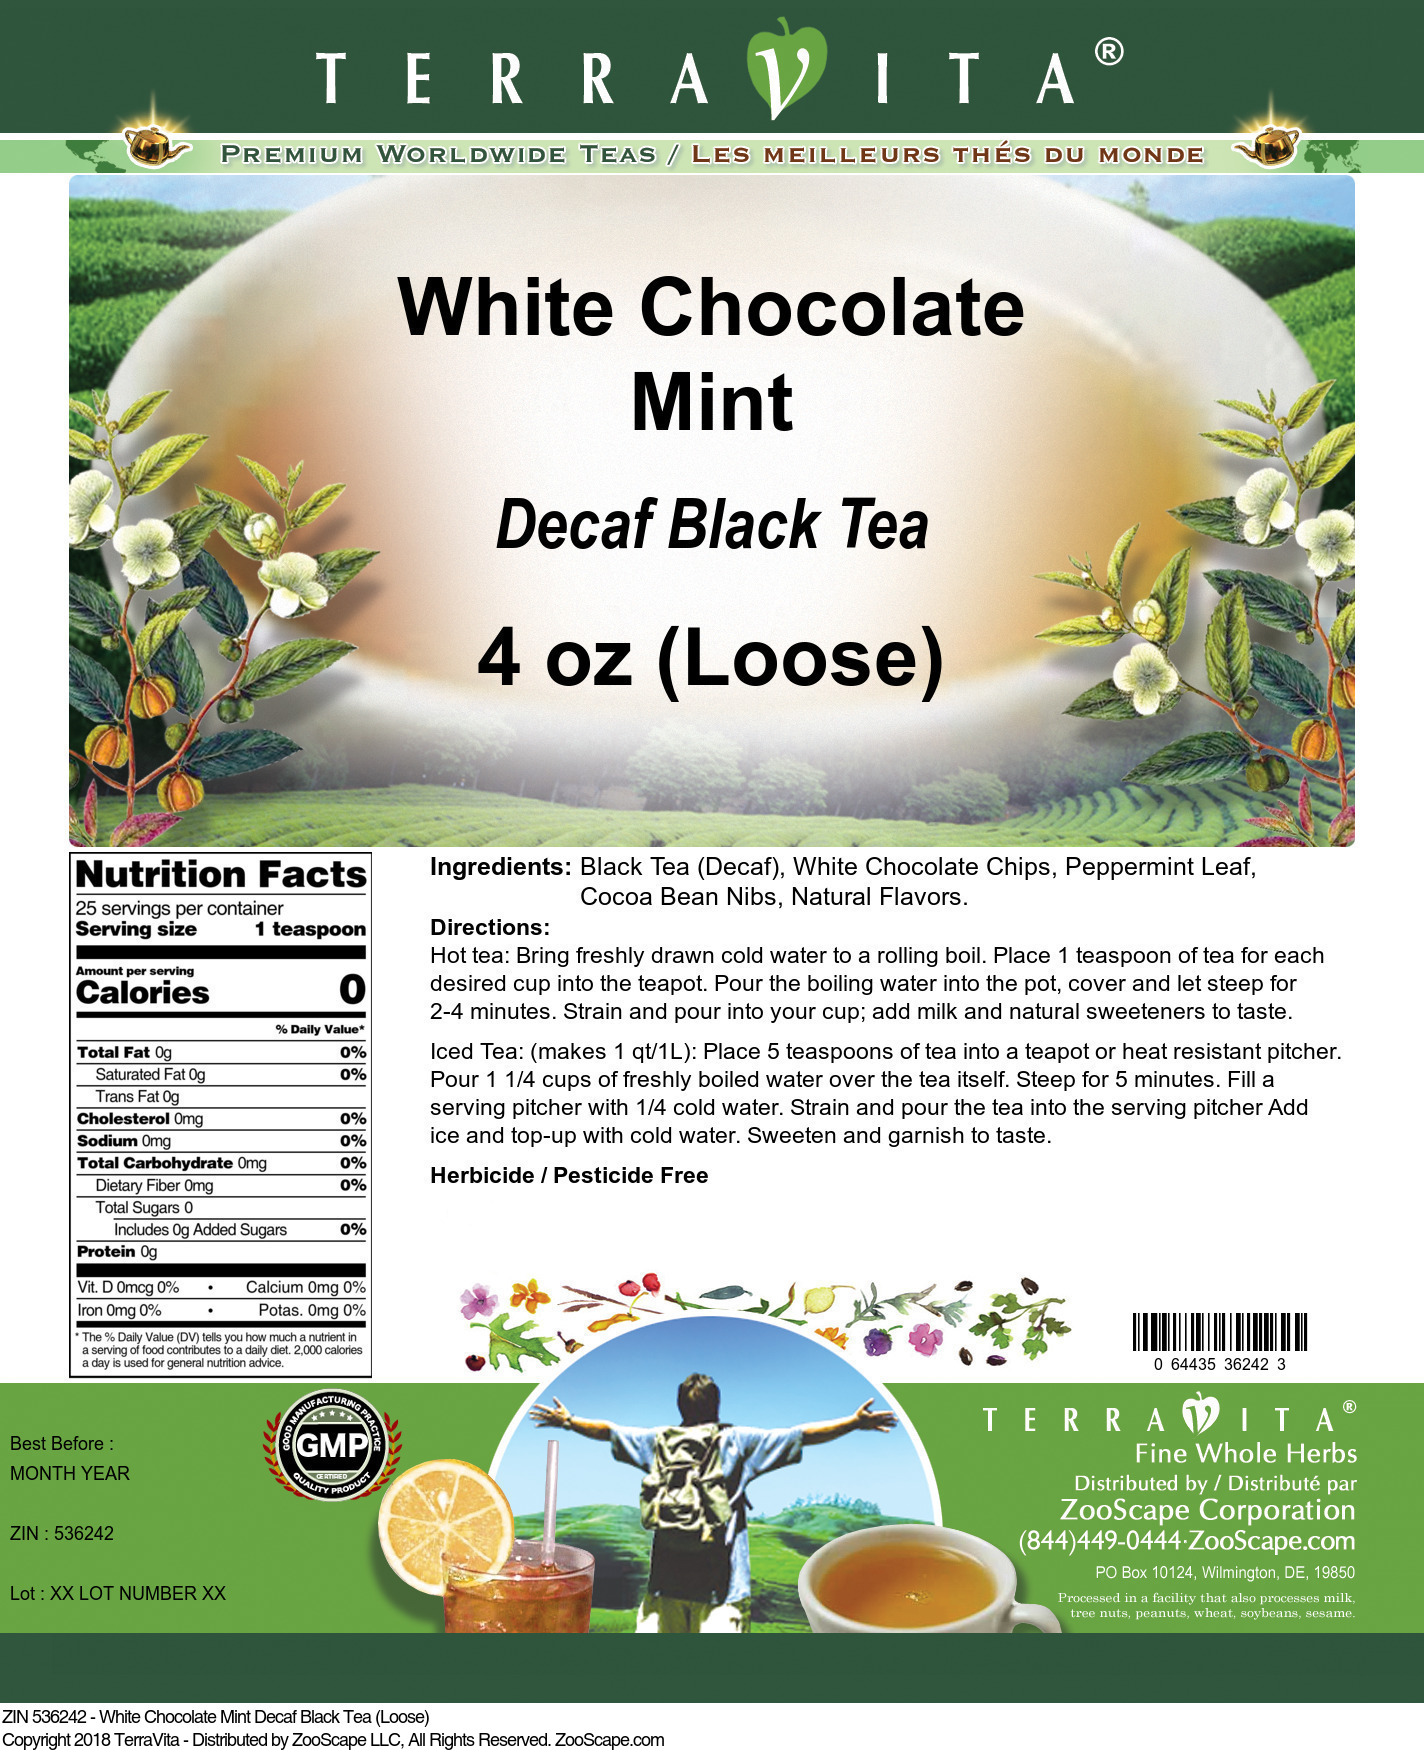 White Chocolate Mint Decaf Black Tea (Loose) - Label